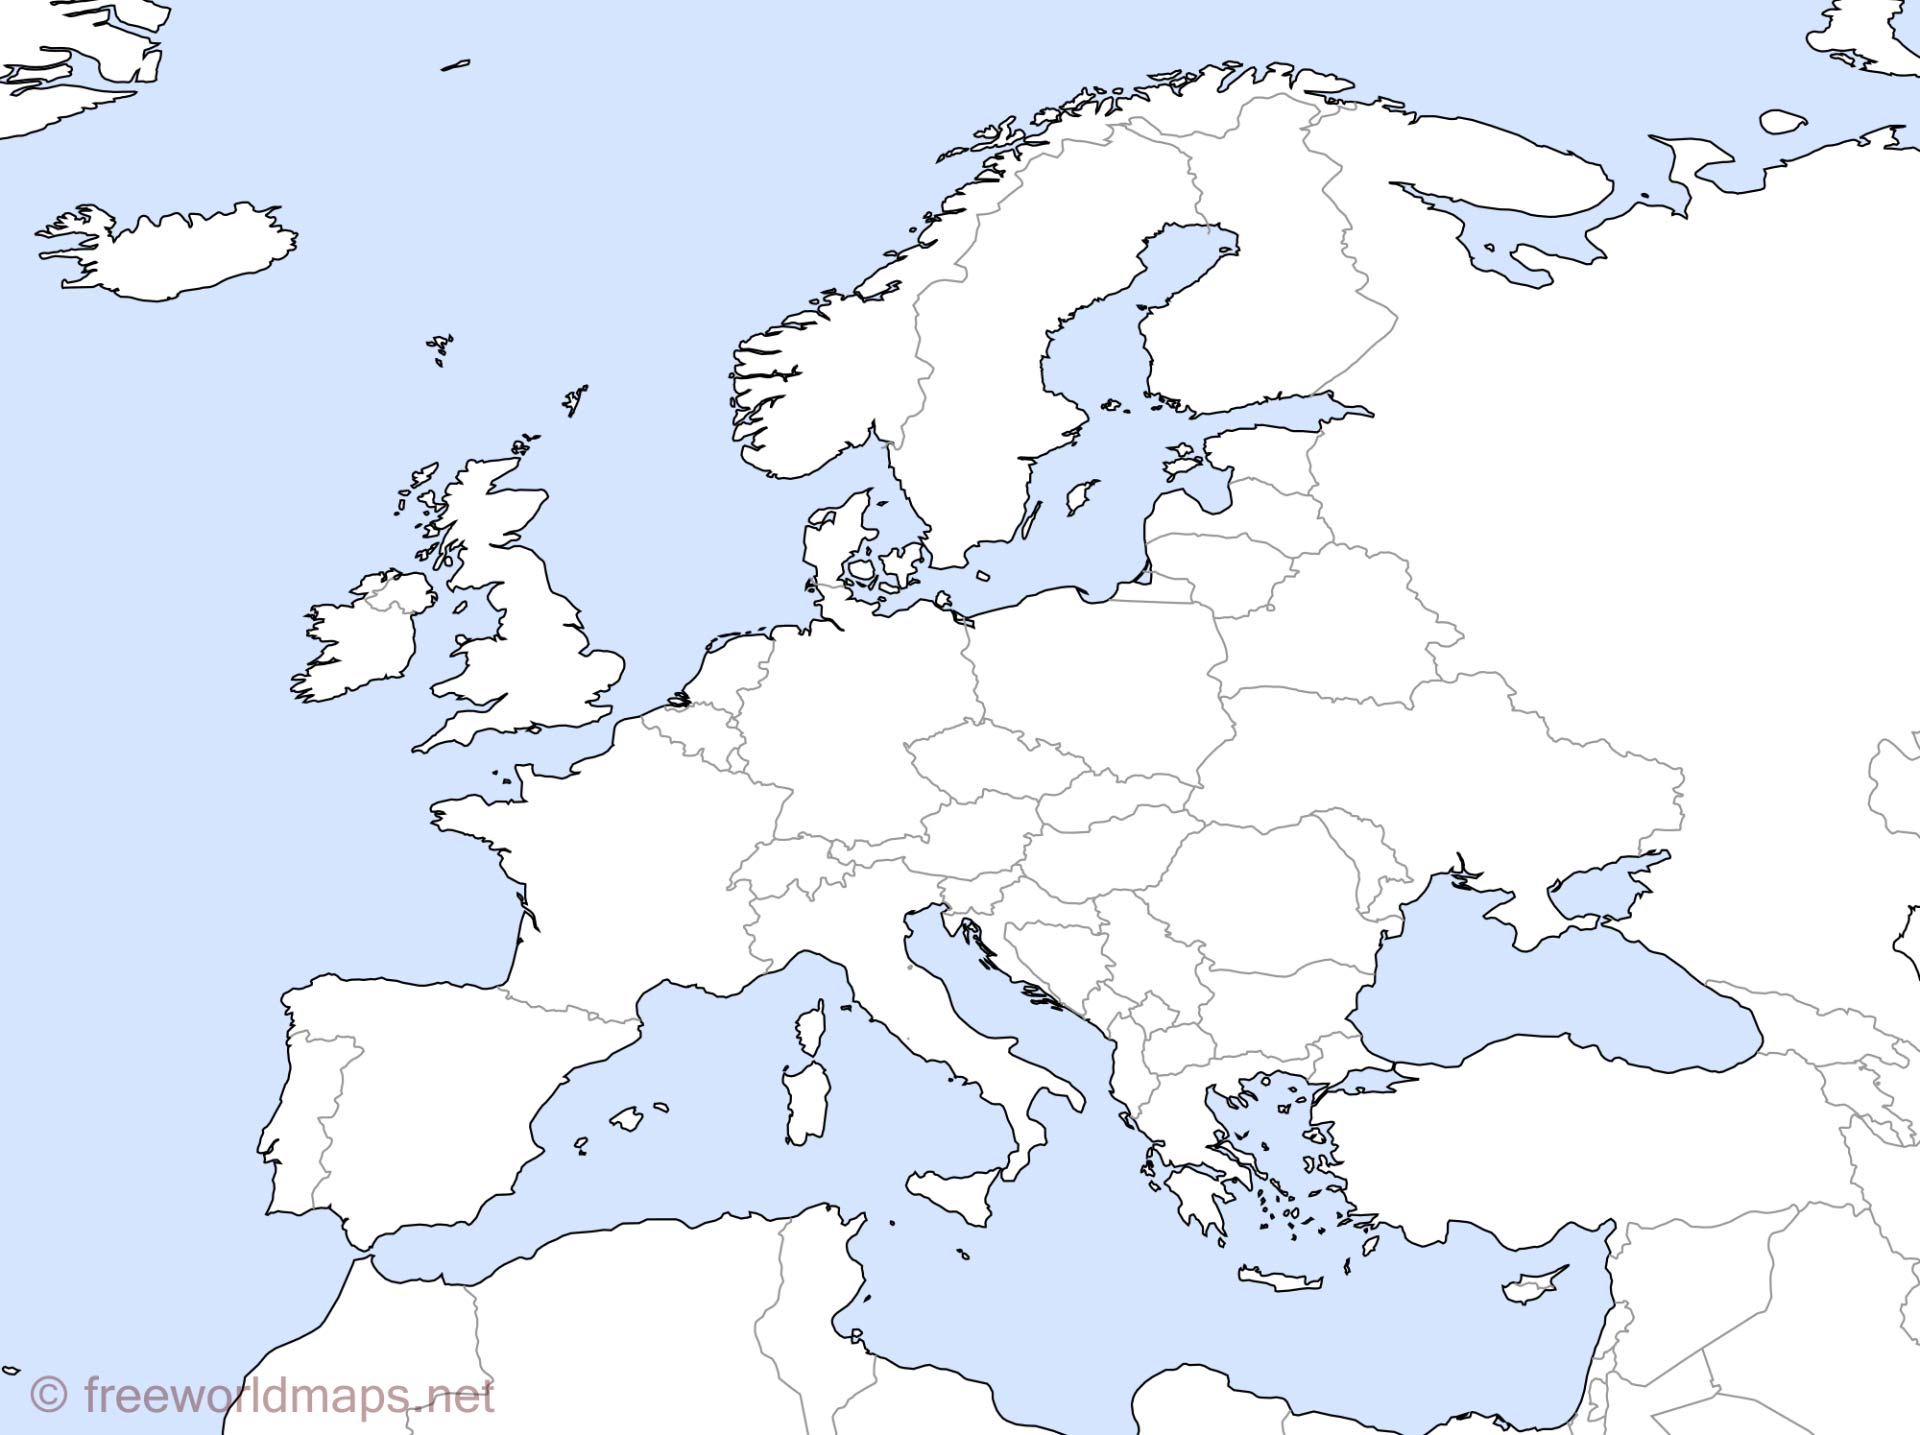 Europe Outline Maps By FreeWorldMaps